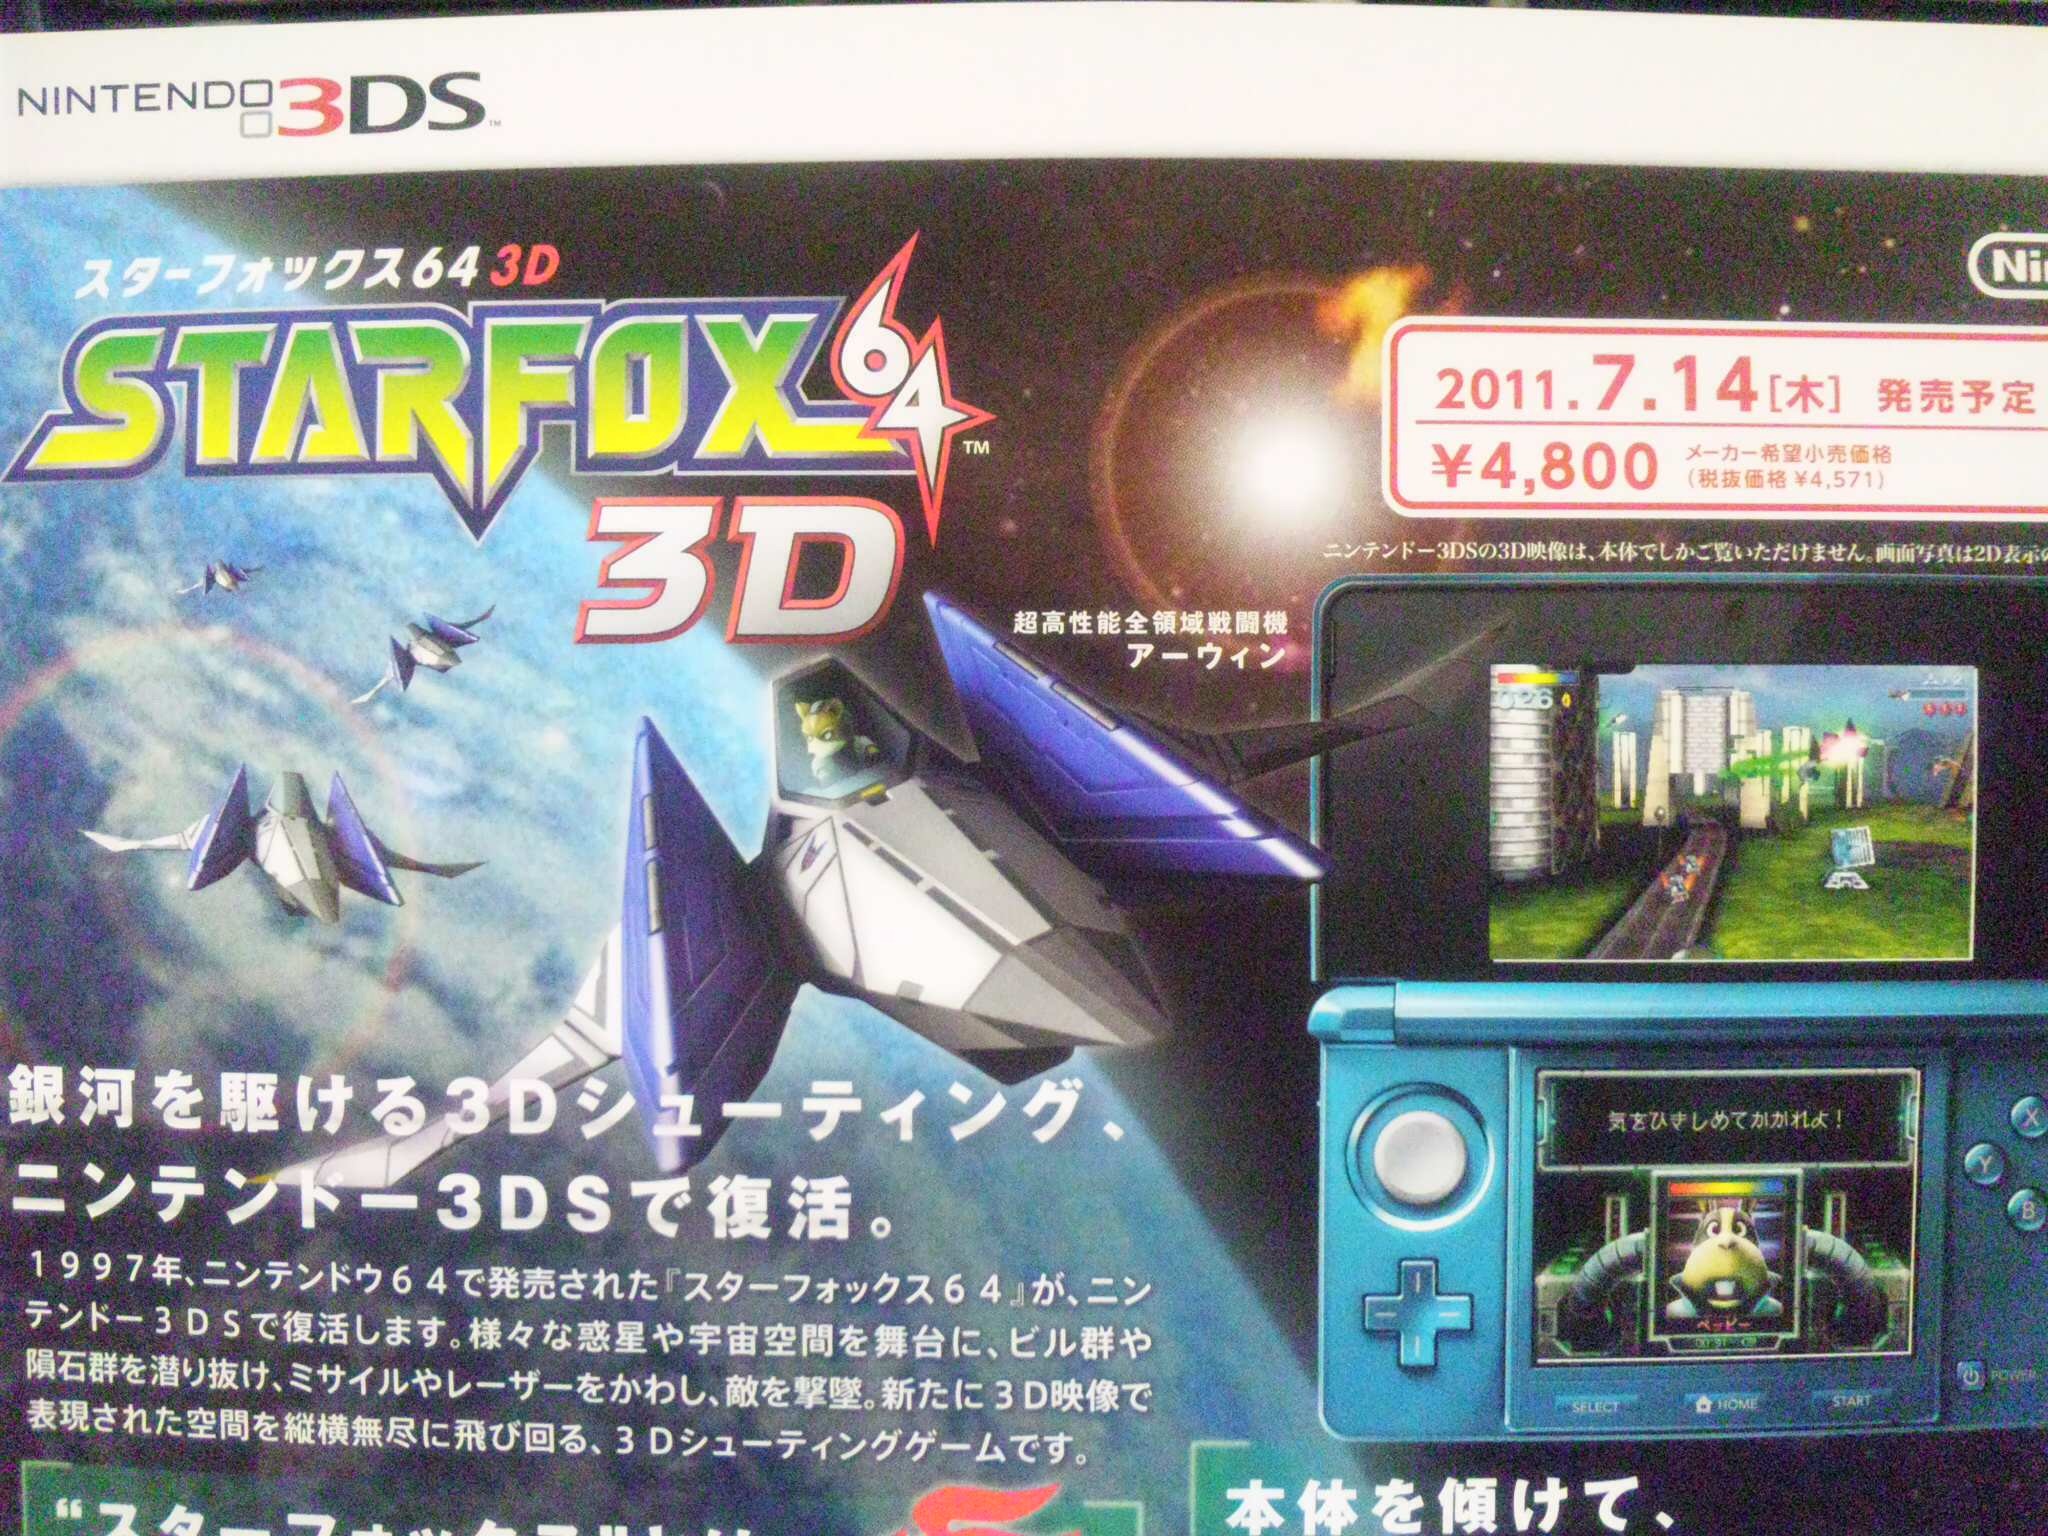 Nintendo Star Fox 64 3D 3Ds Used